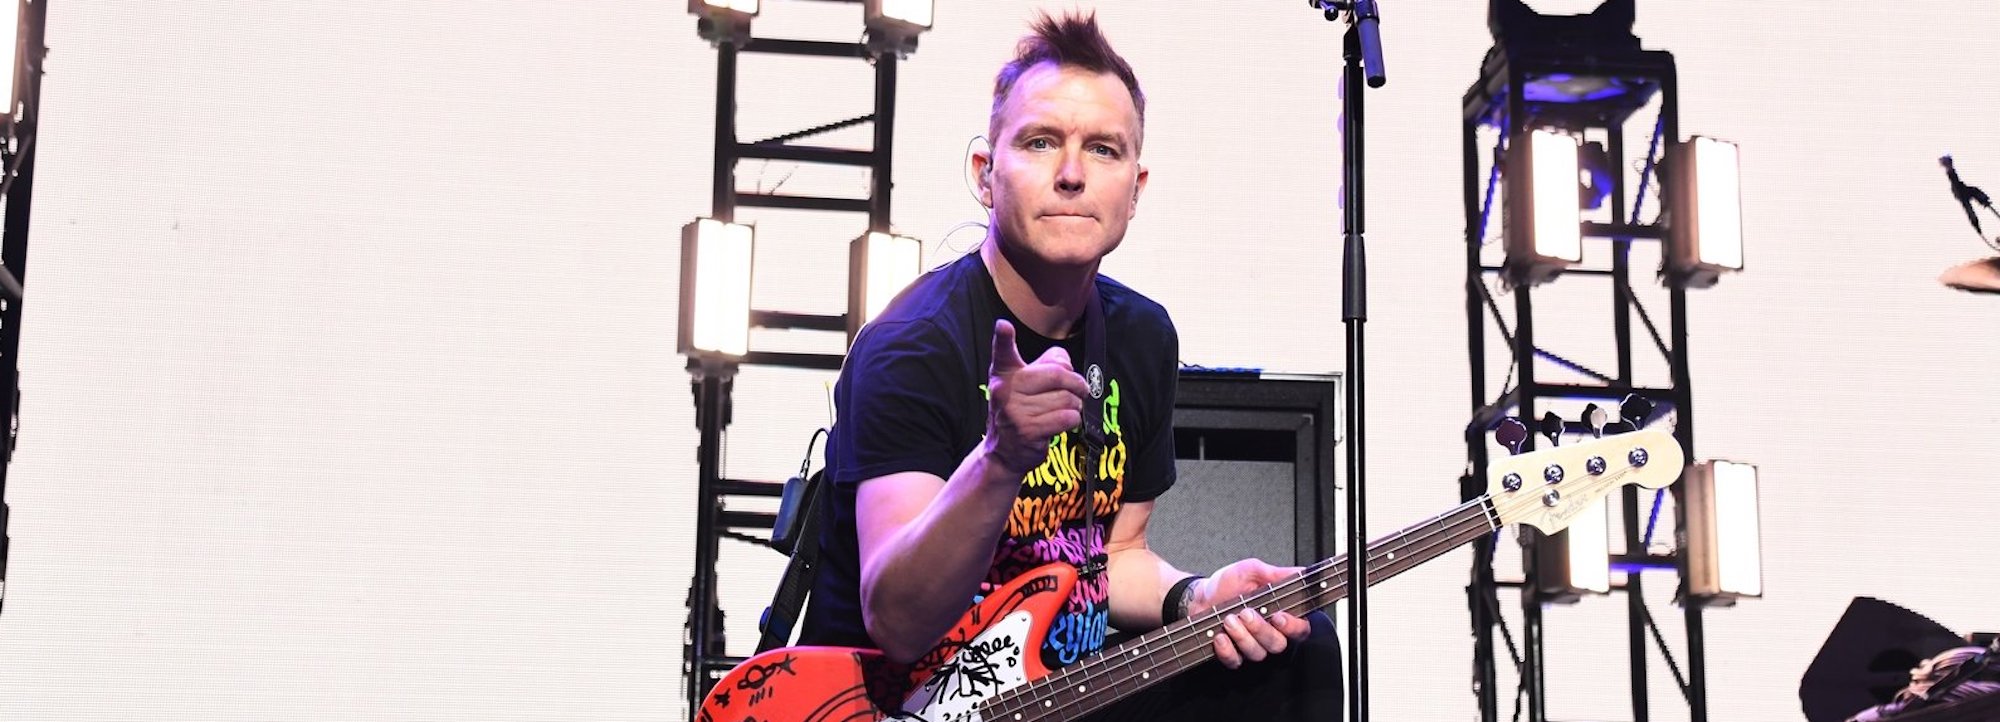 Blink-182’s Mark Hoppus Reveals Cancer Battle, Travis Barker and More, Share Support